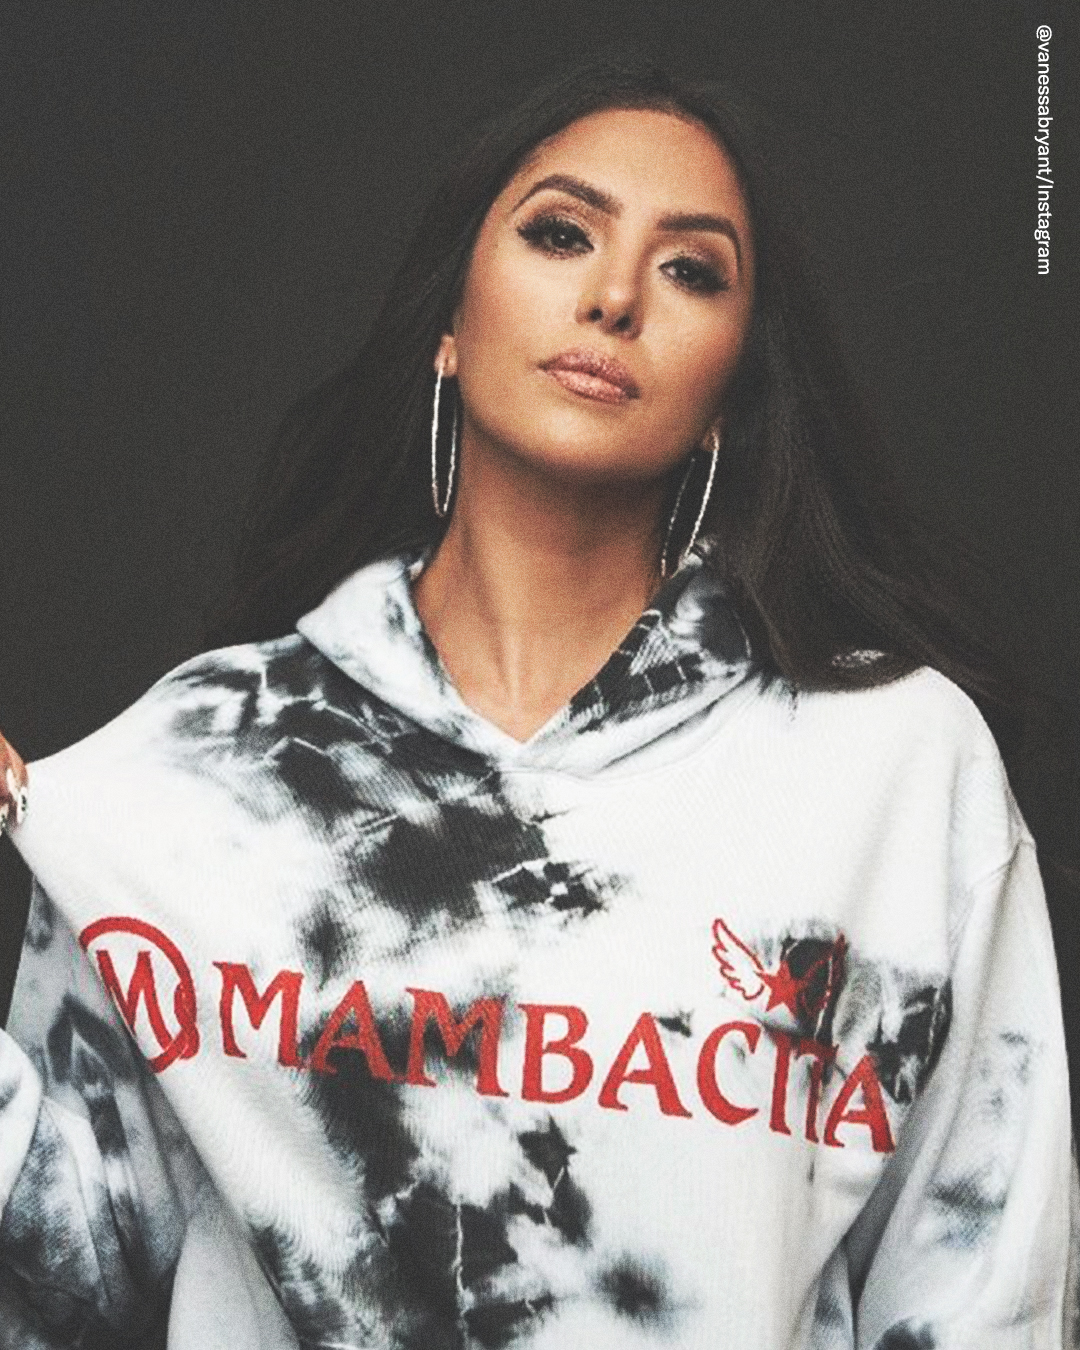 espnW on X: Vanessa Bryant announced the launch of “Mambacita